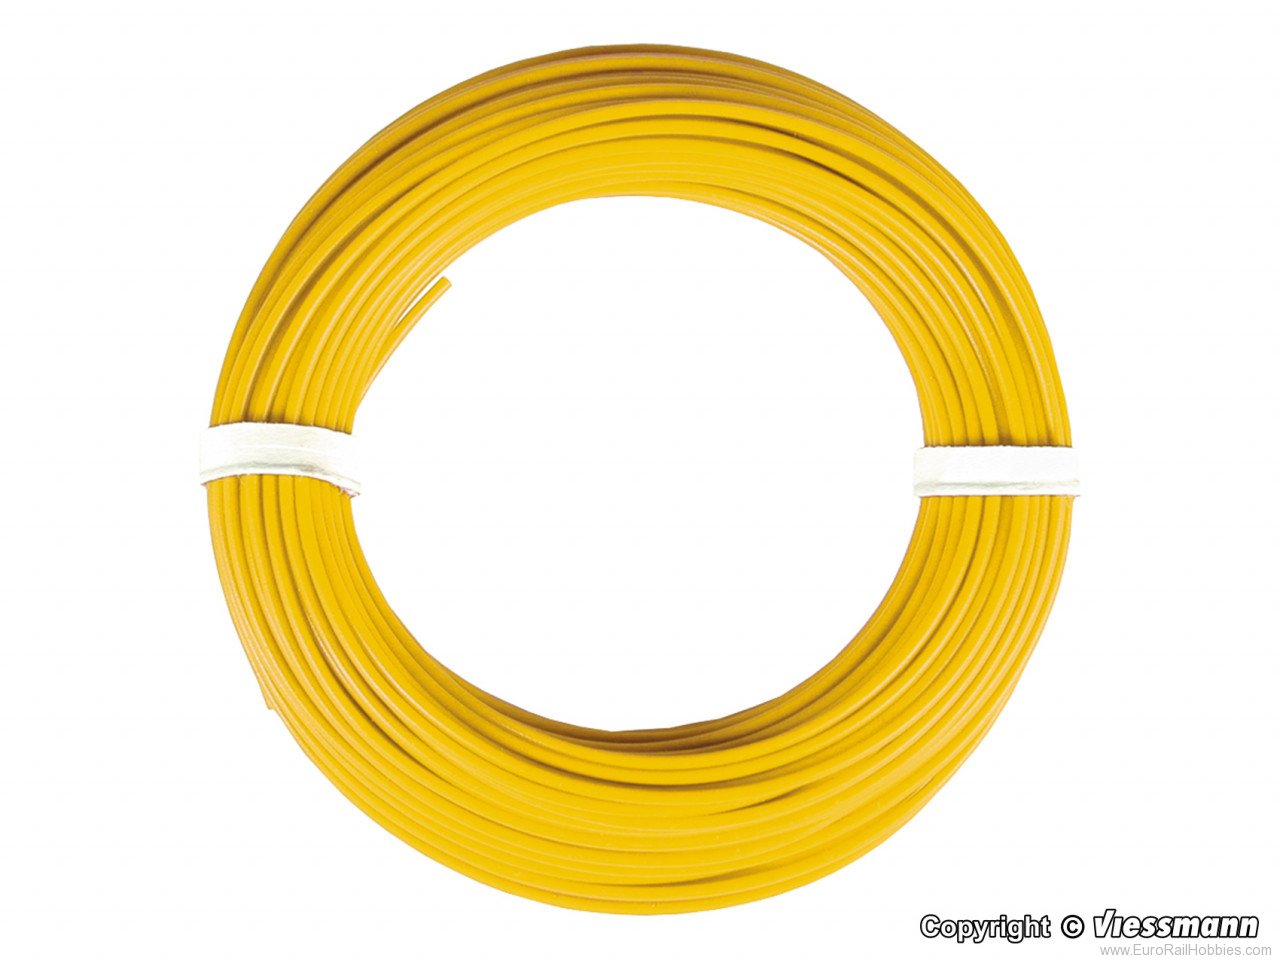 Viessmann 6864 Wire,0,14 mm dia., yellow, 10 m